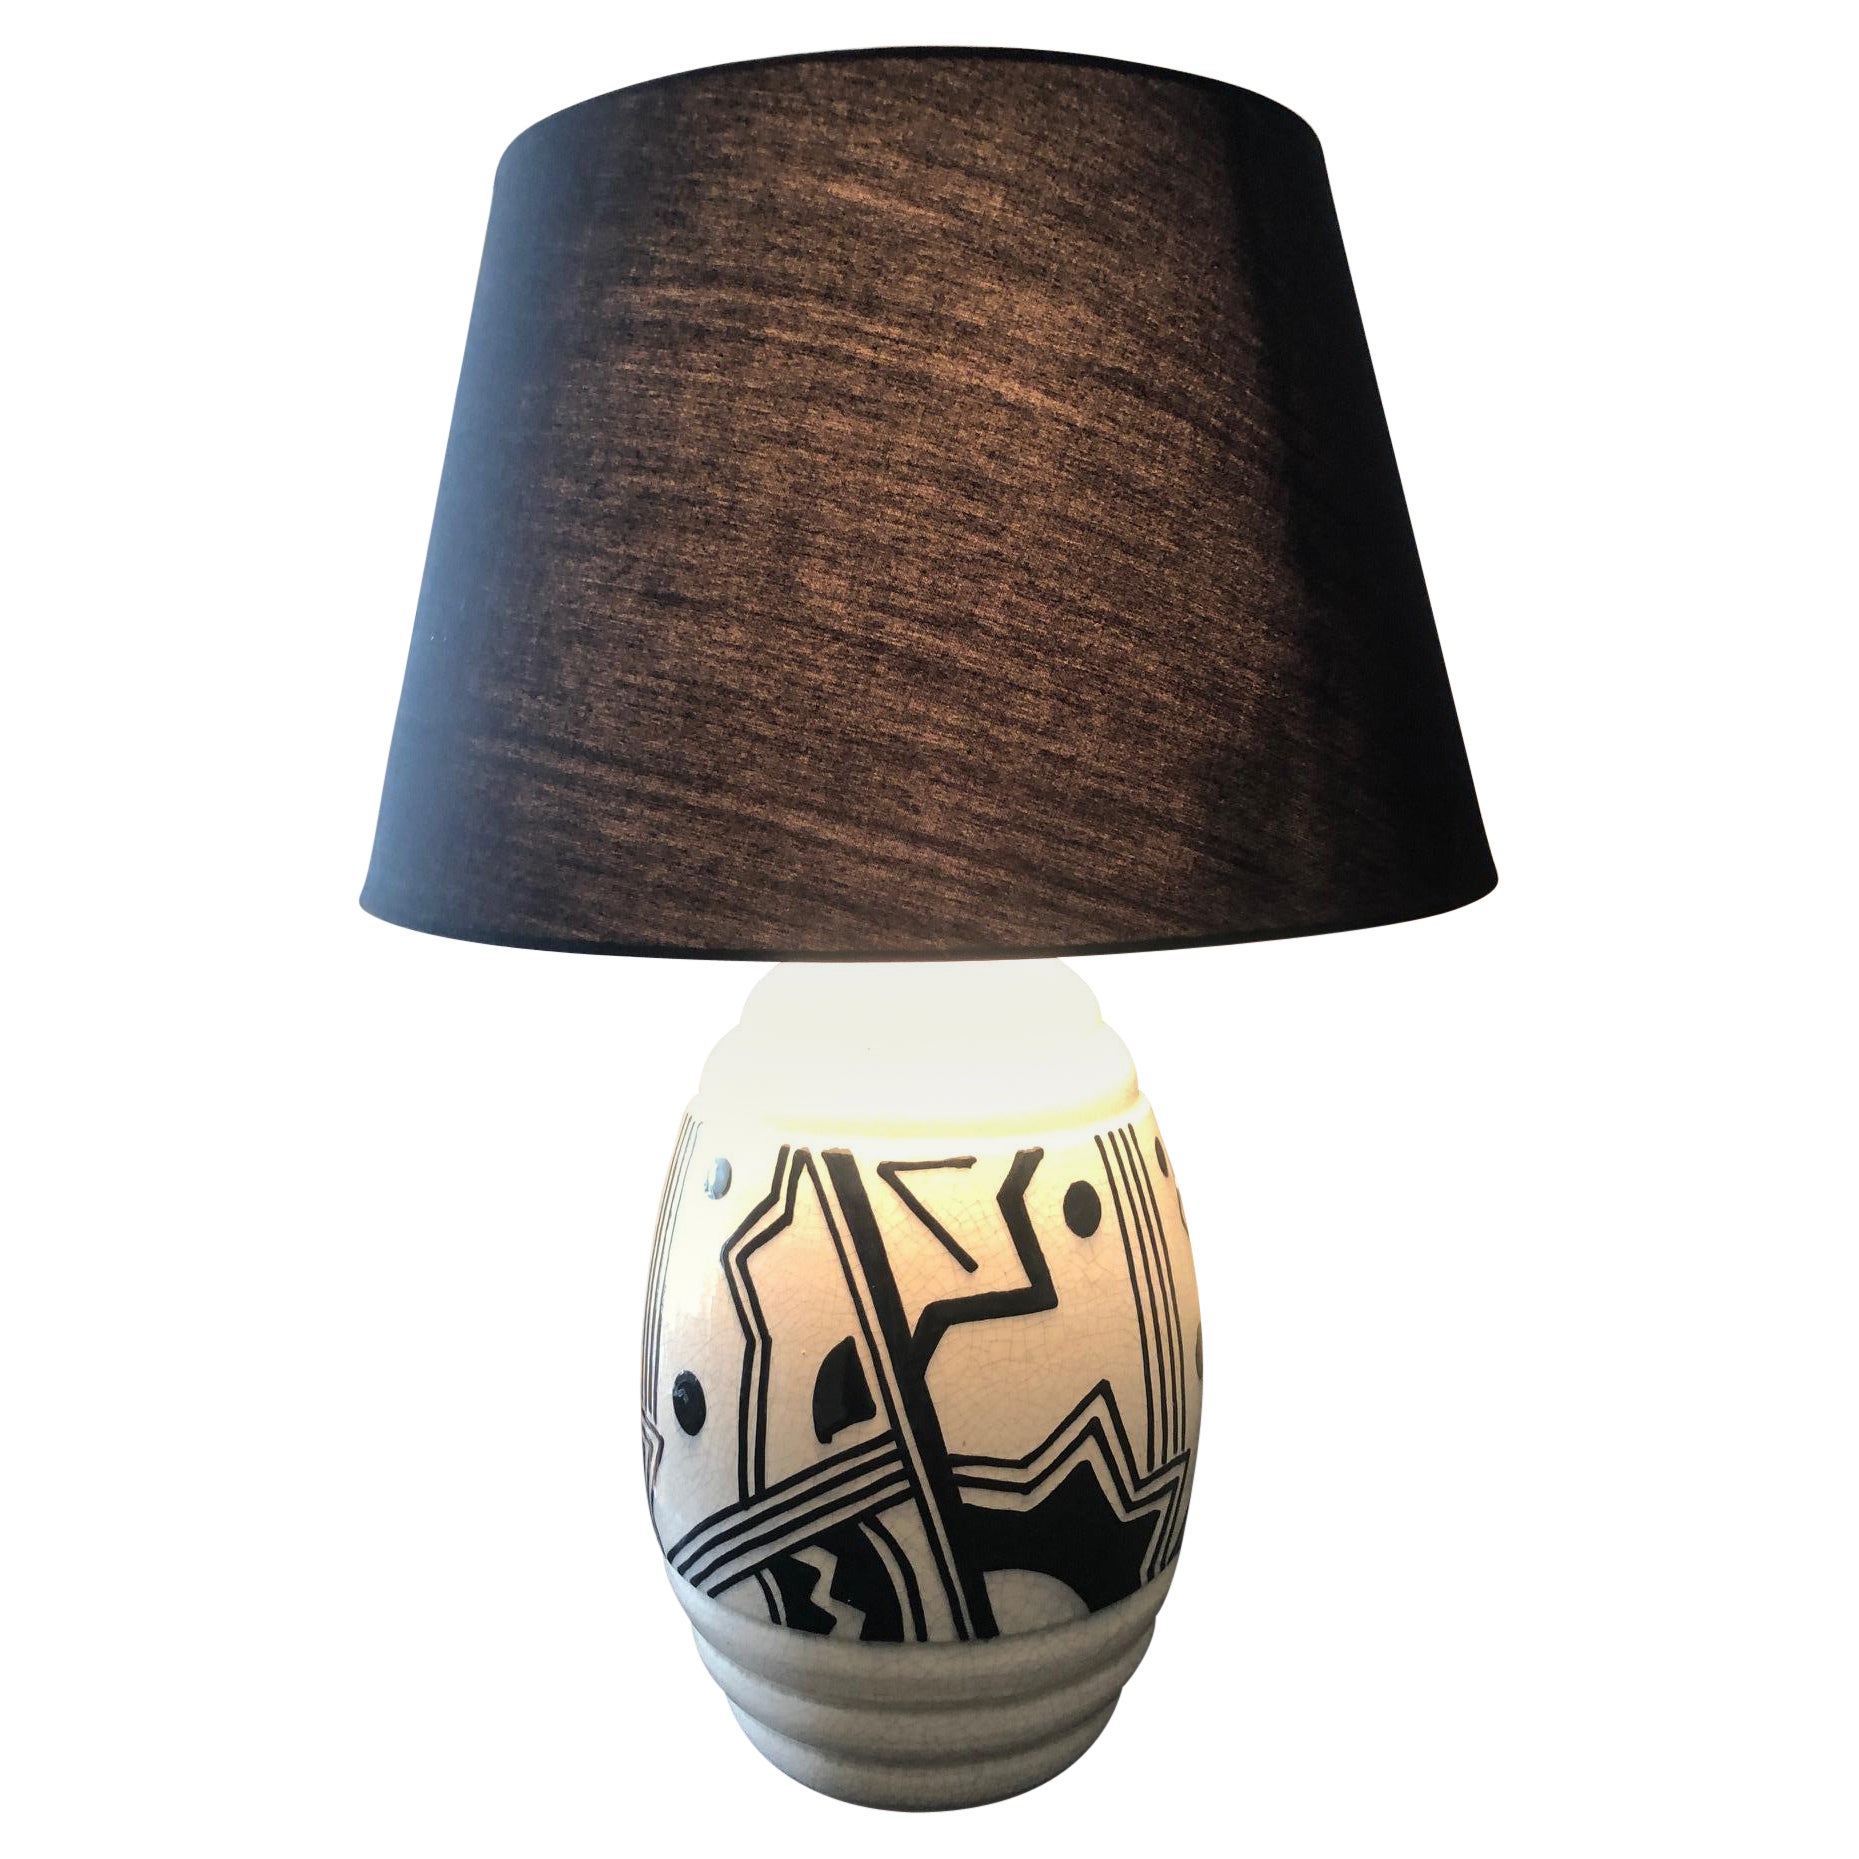 Art-déco-Lampe aus Keramik